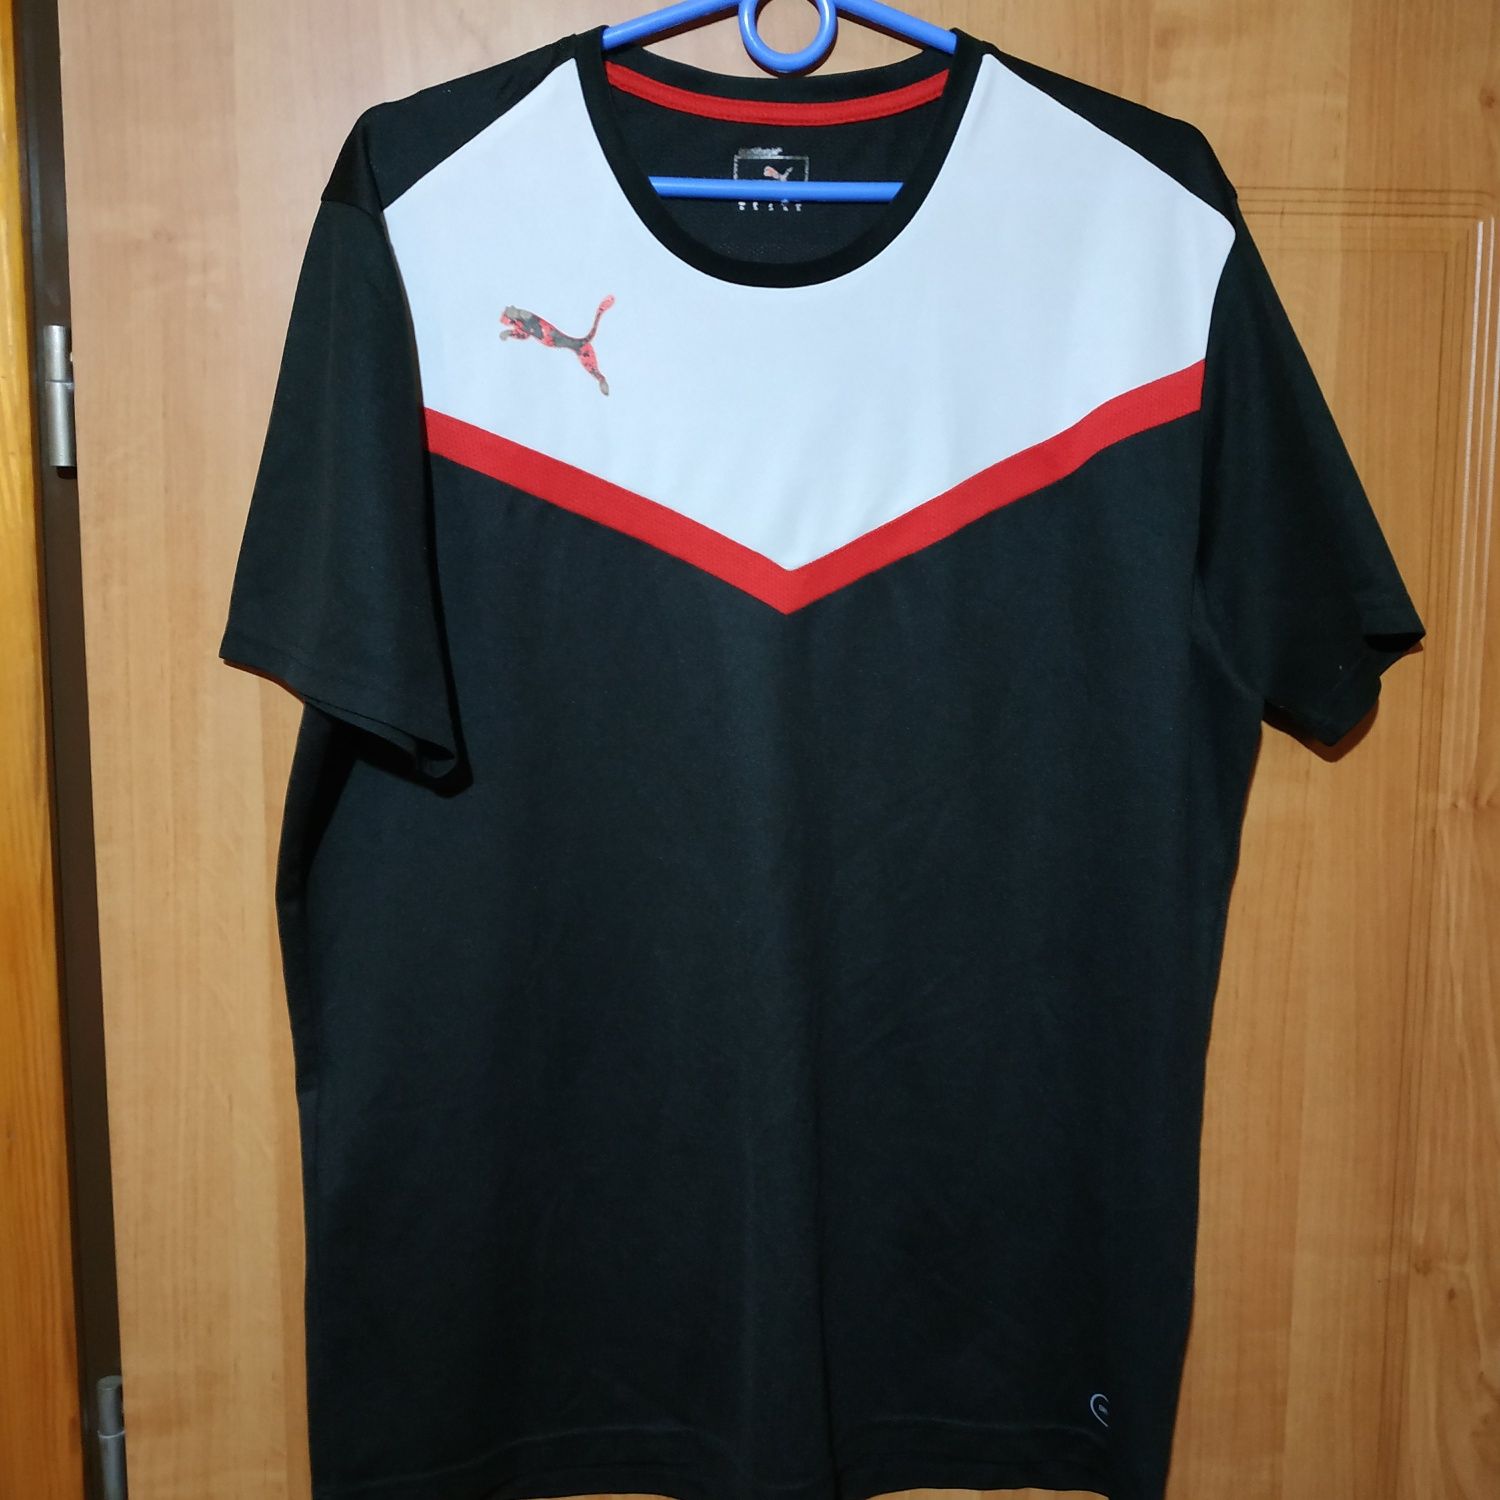 Koszulka sportowa śliska Puma, T-shirt